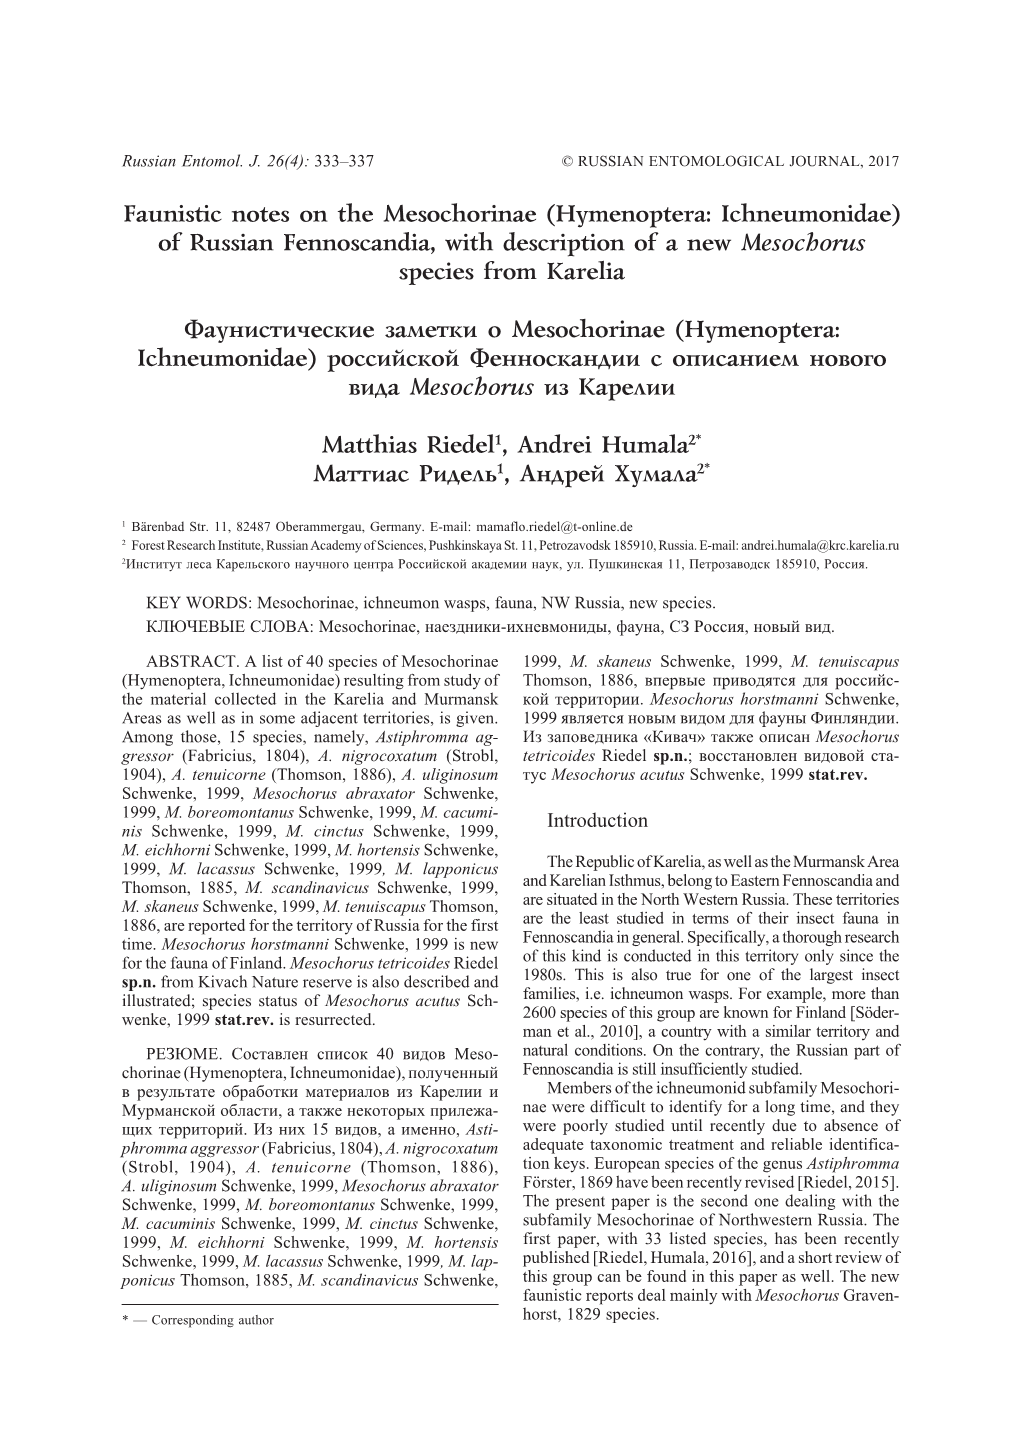 Hymenoptera: Ichneumonidae) of Russian Fennoscandia, with Description of a New Mesochorus Species from Karelia